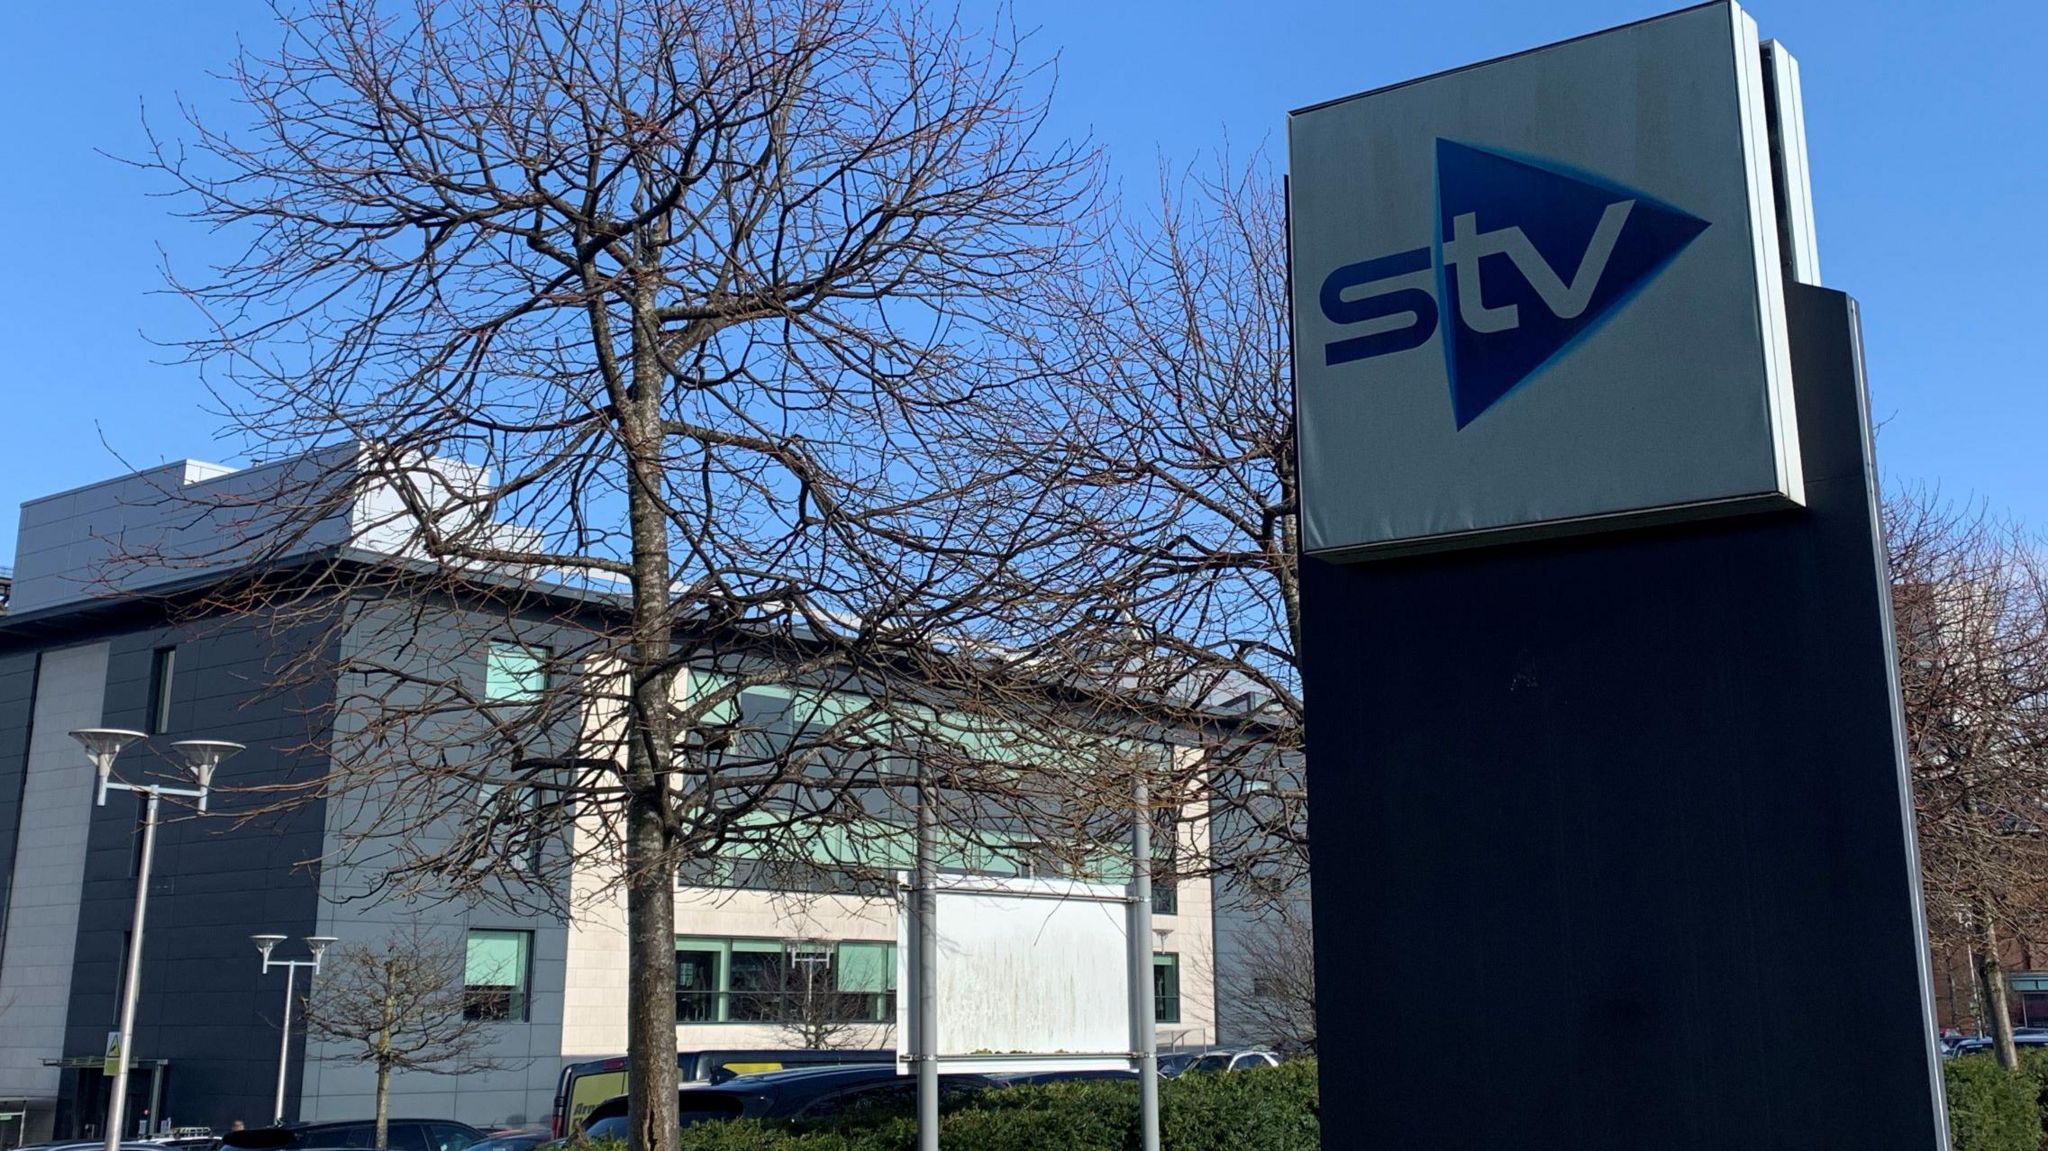 STV's Glasgow office building